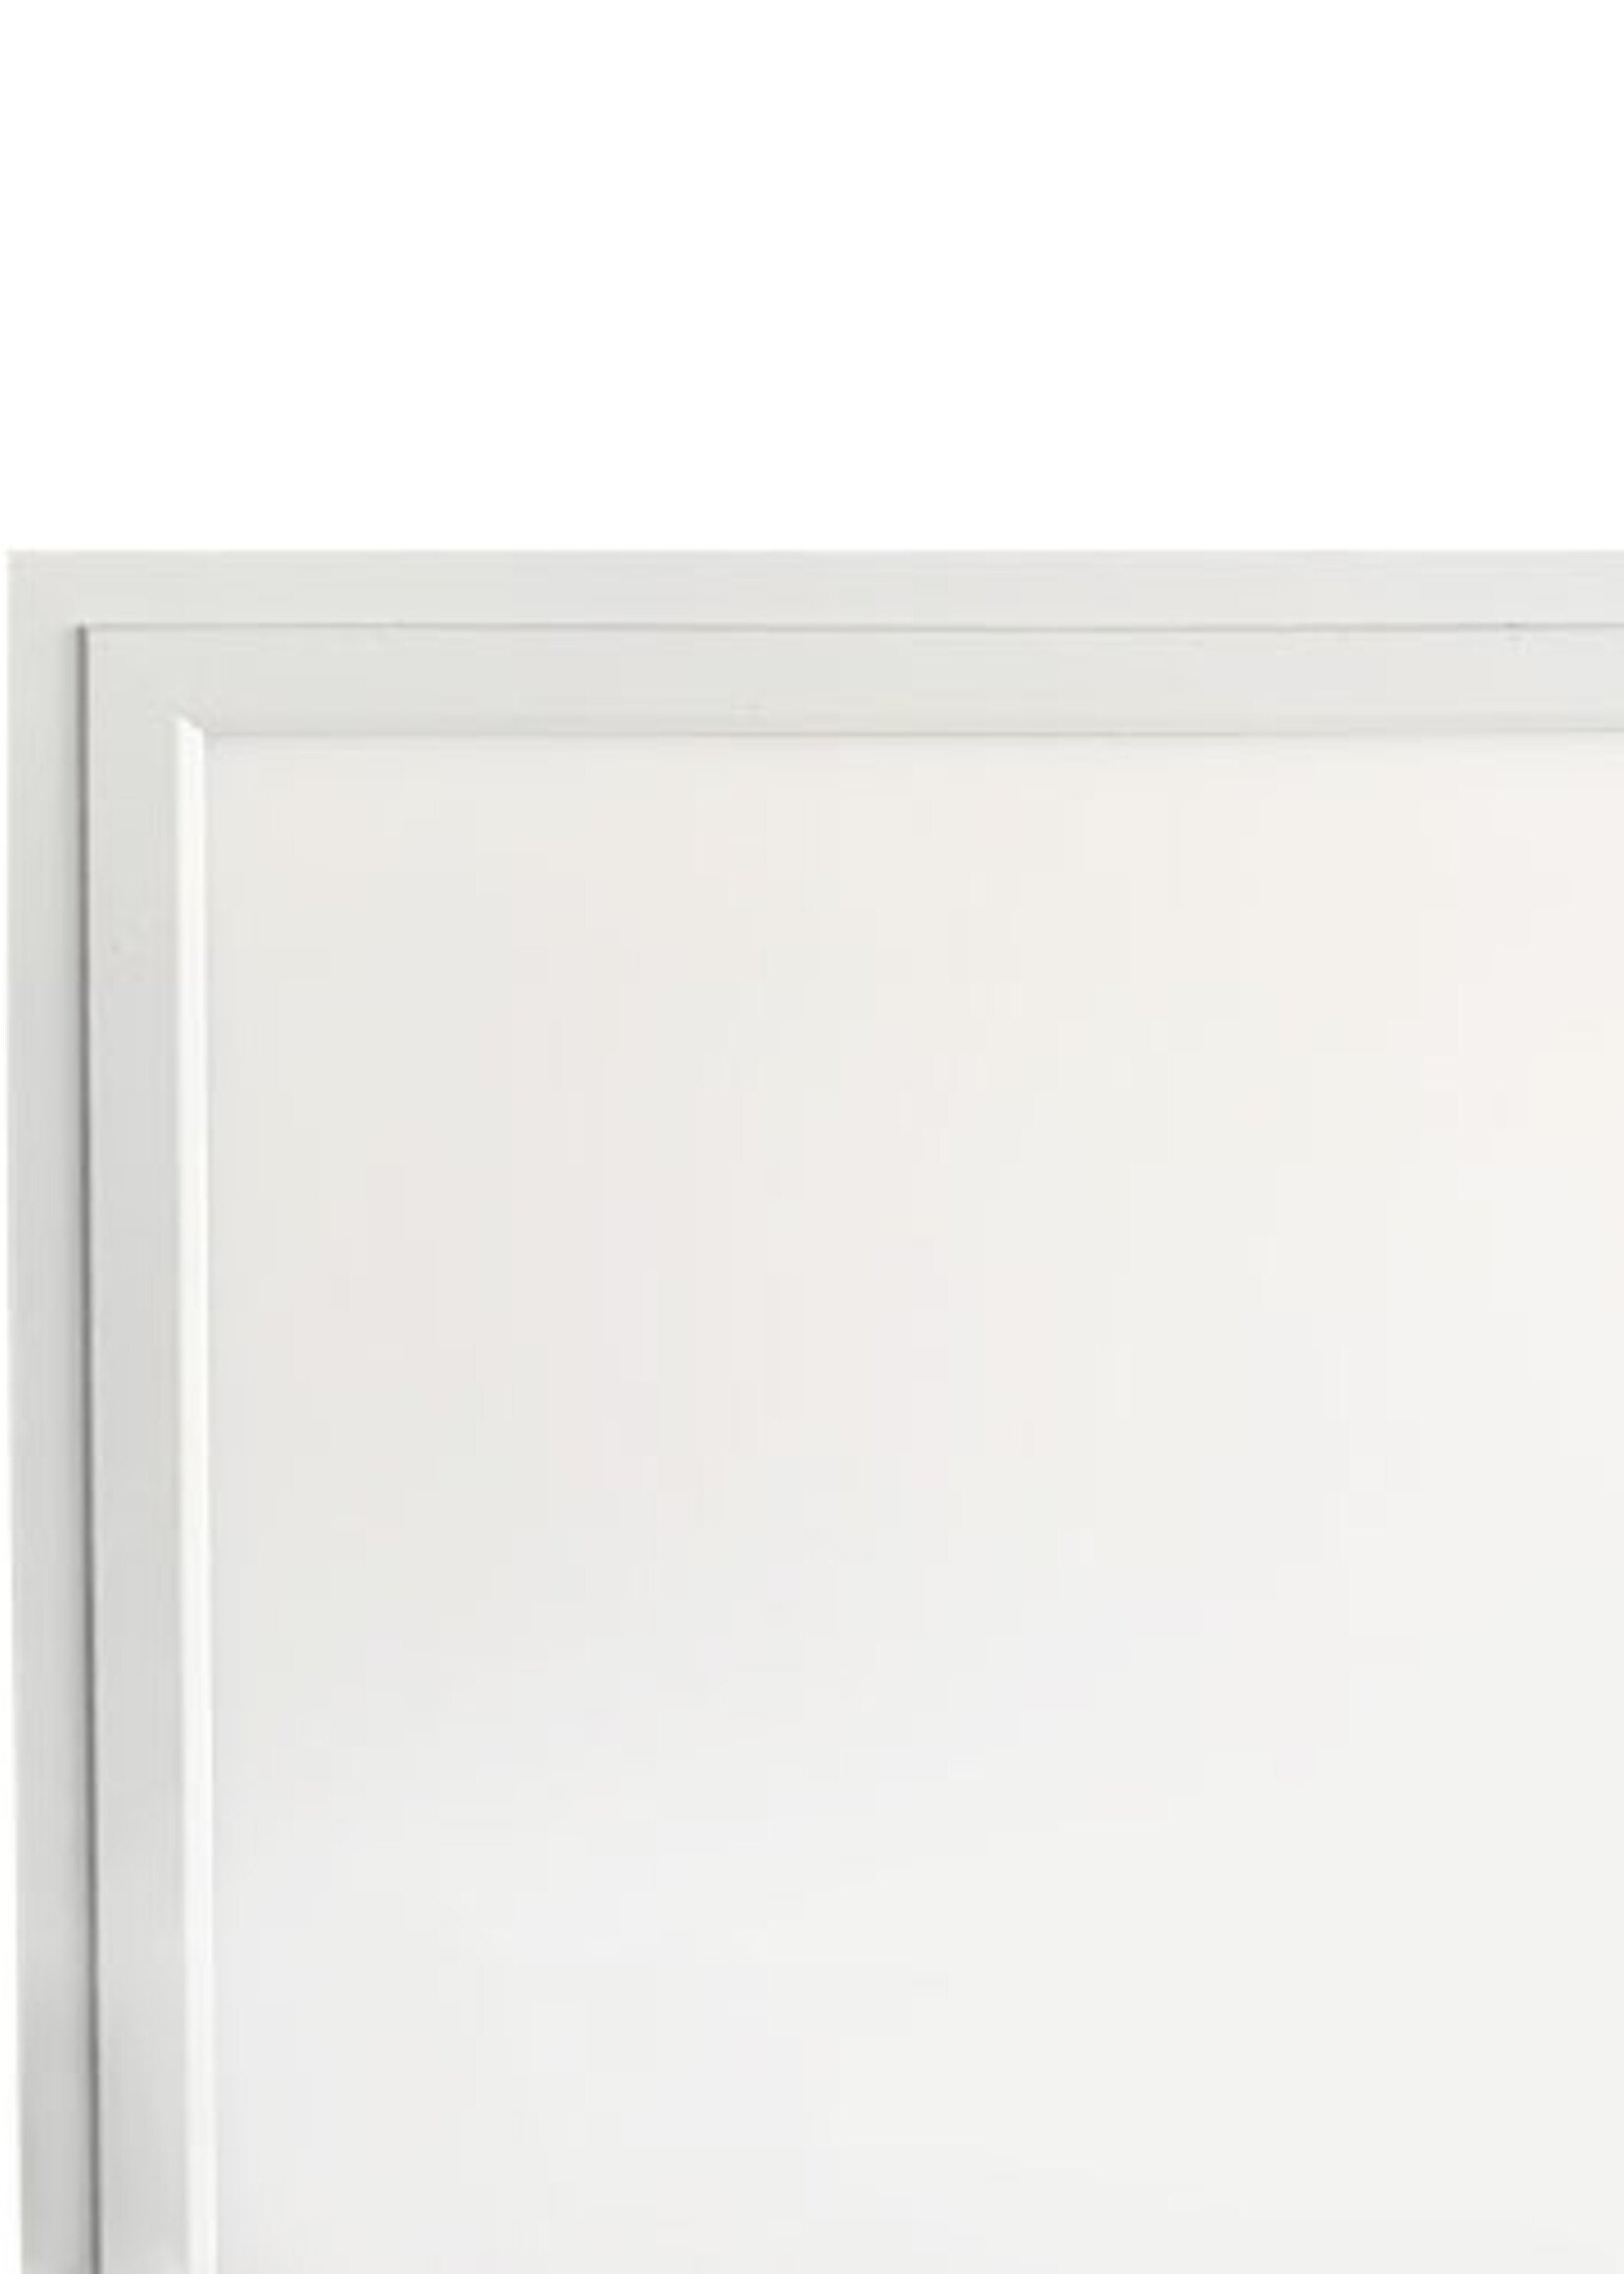 LEDWINKEL-Online LED Panel 60x60cm UGR<19 36W 110lm/W Back-lit